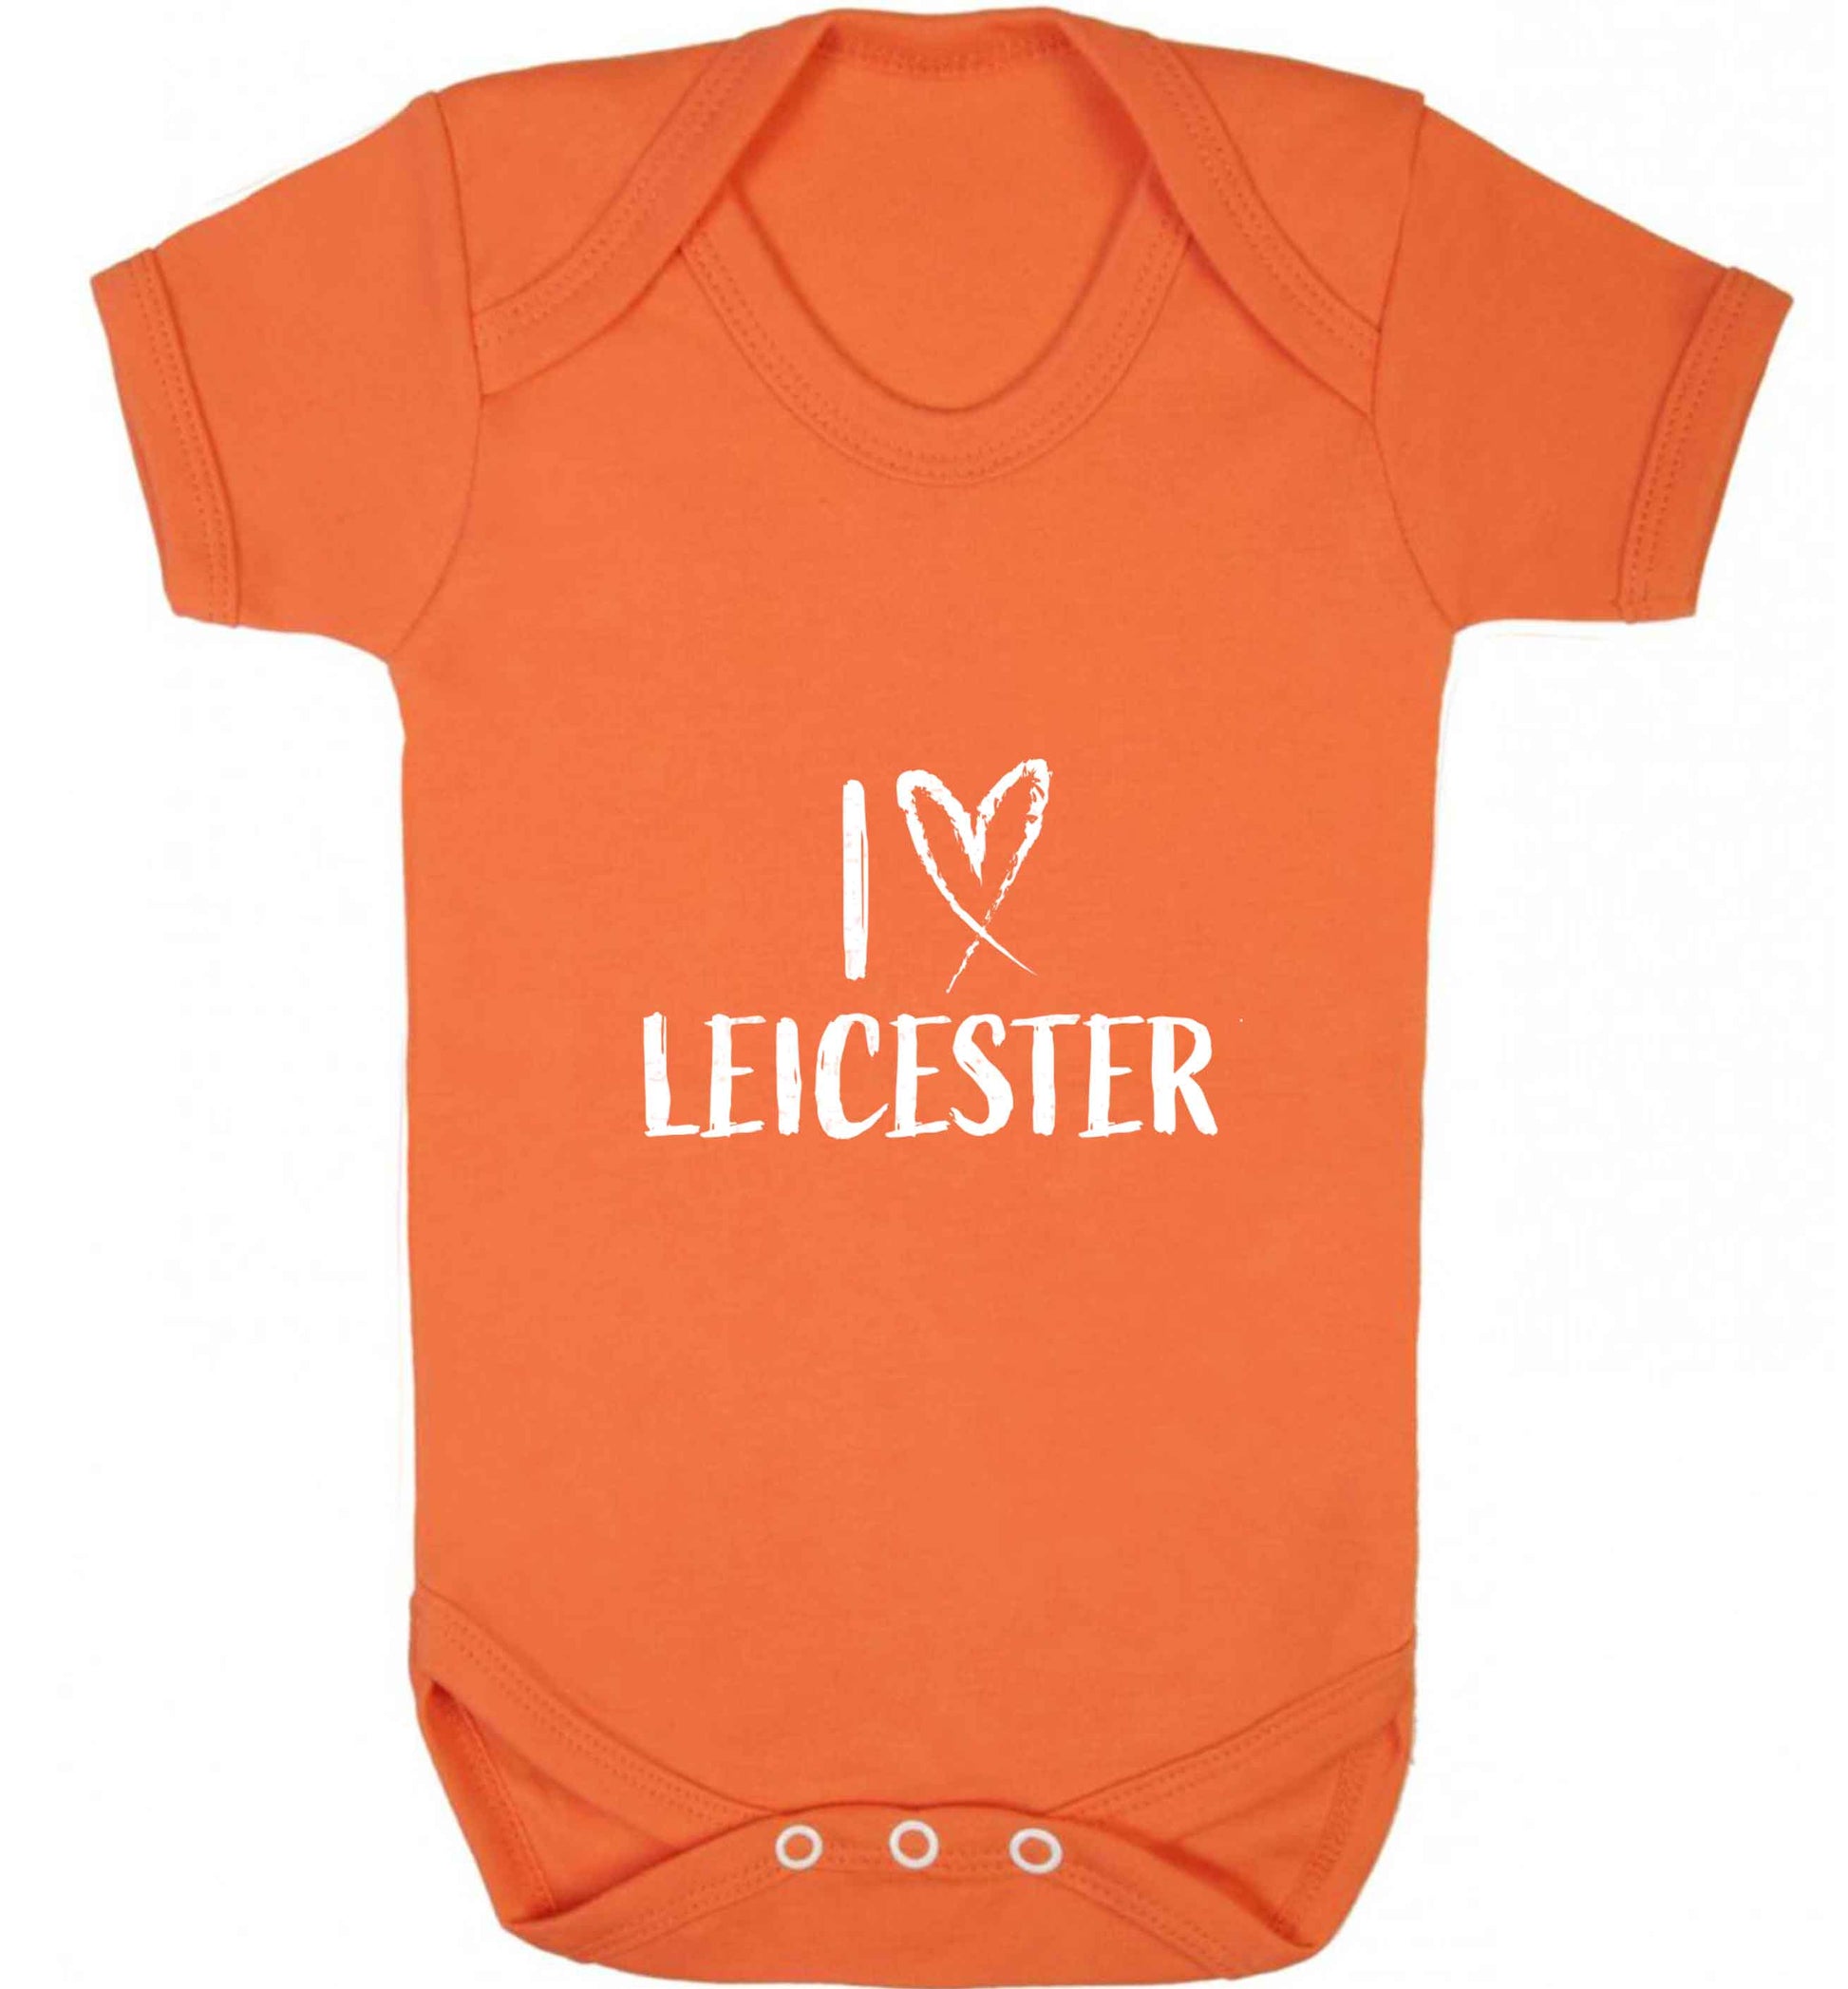 I love Leicester baby vest orange 18-24 months